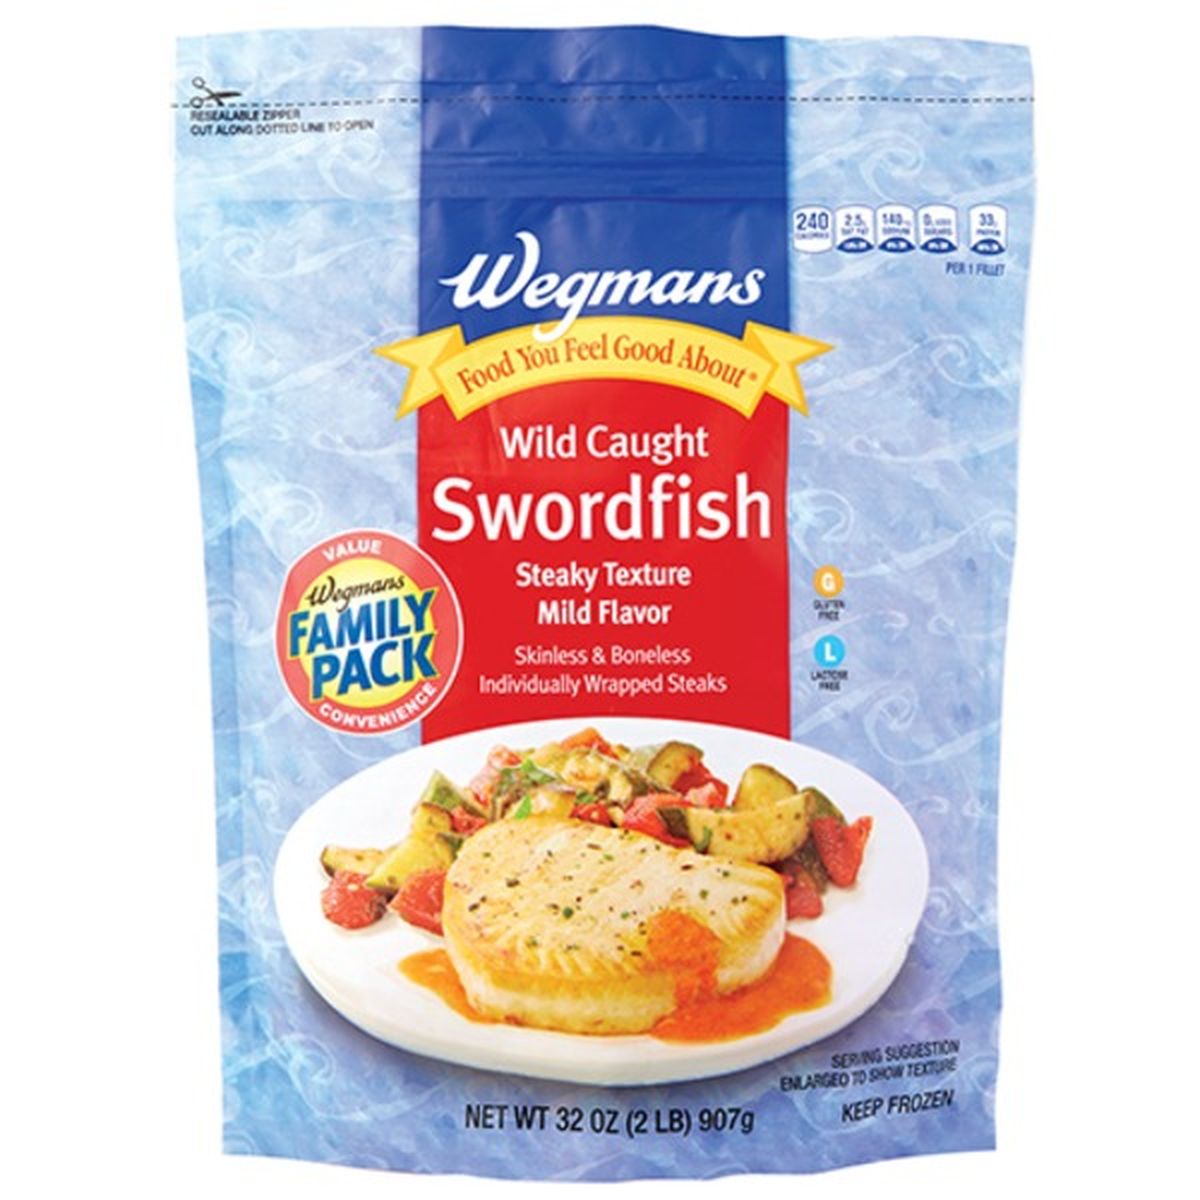 Calories in Wegmans Wild Caught Swordfish, FAMILY PACK